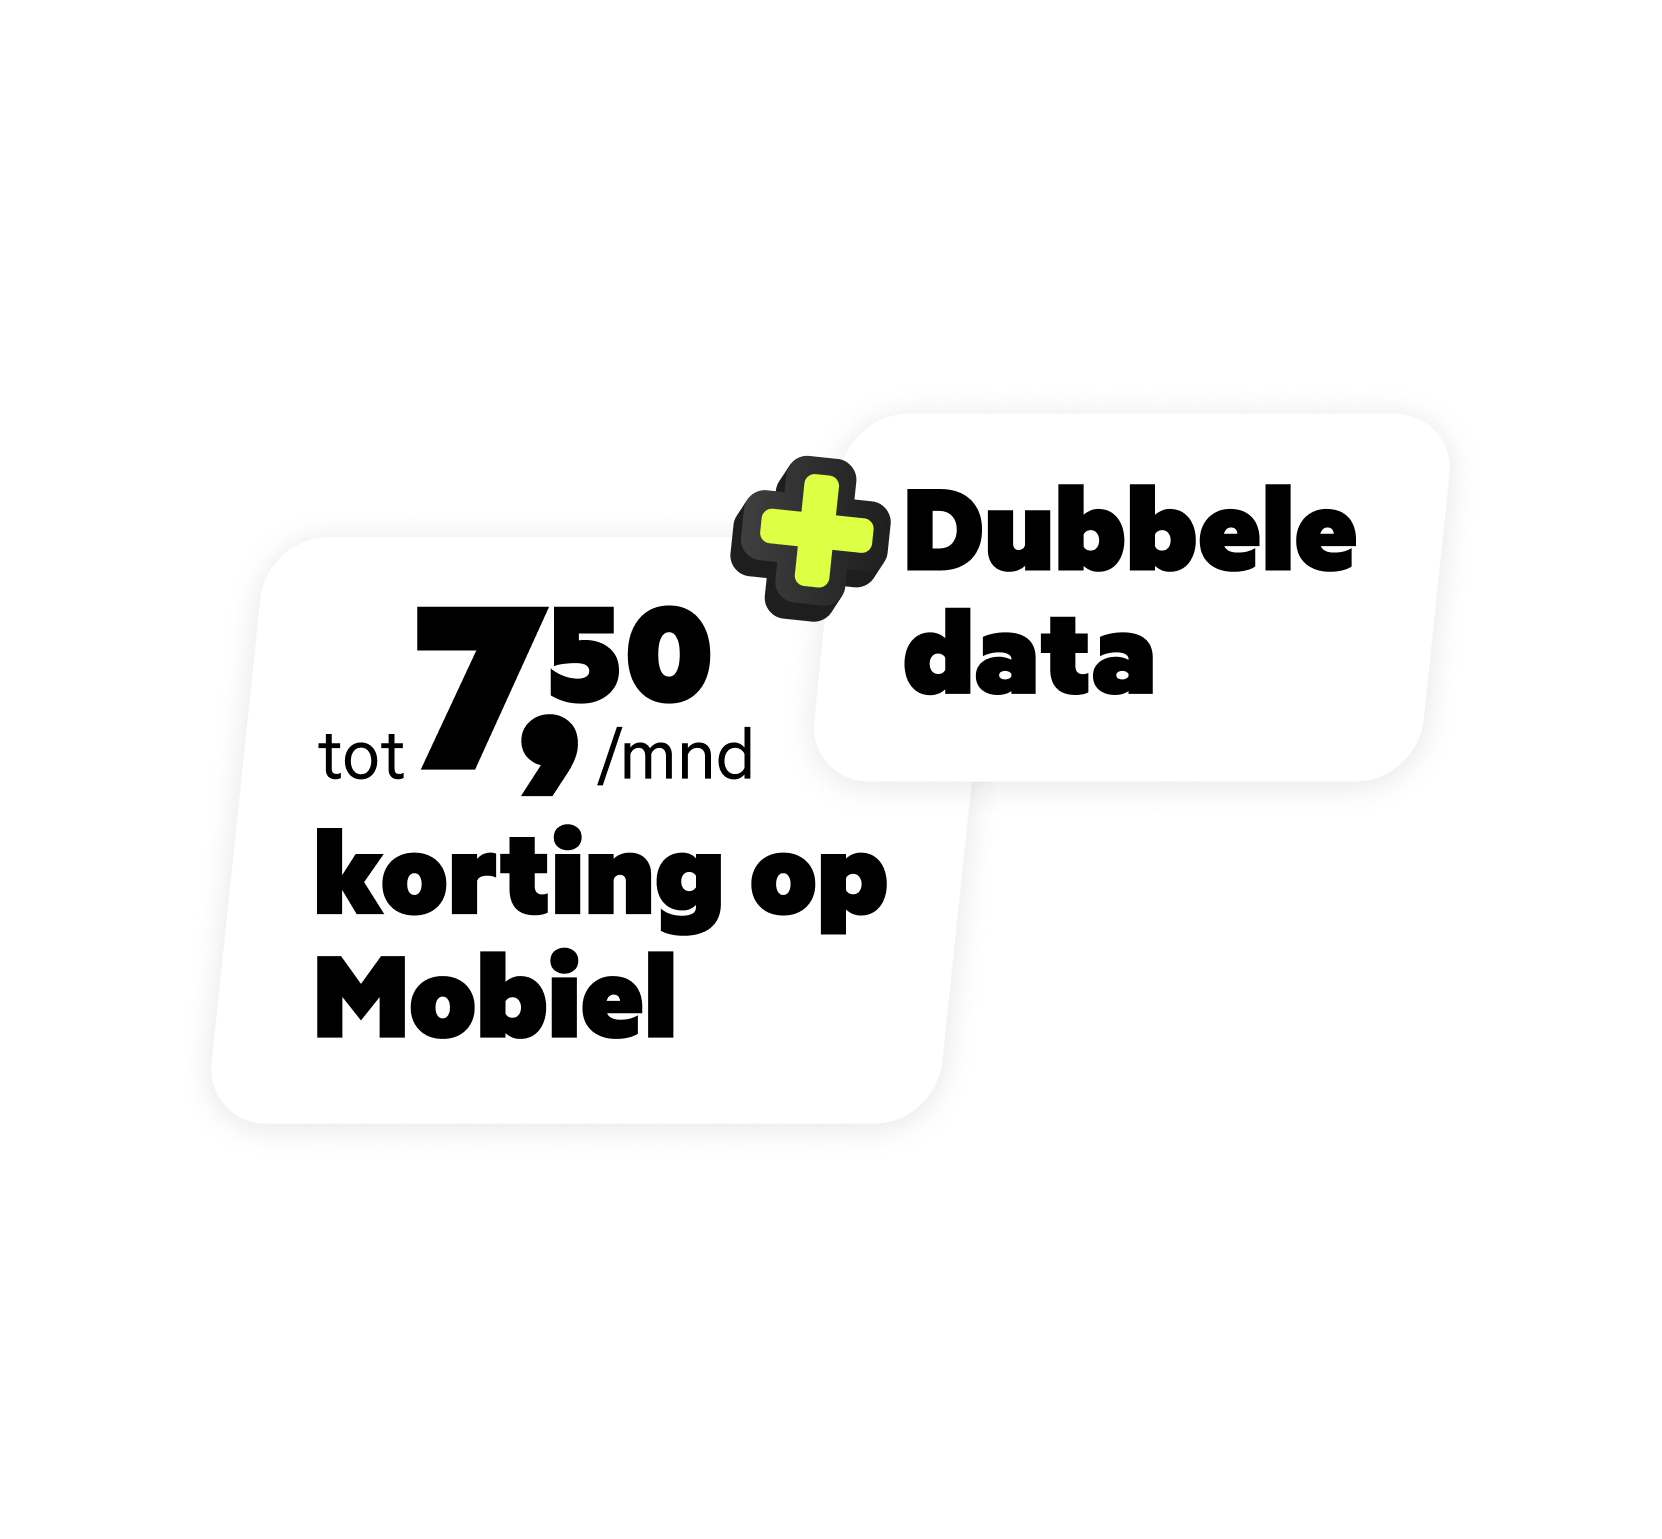 tot 7,50 euro per maand korting op mobiel + dubbele data